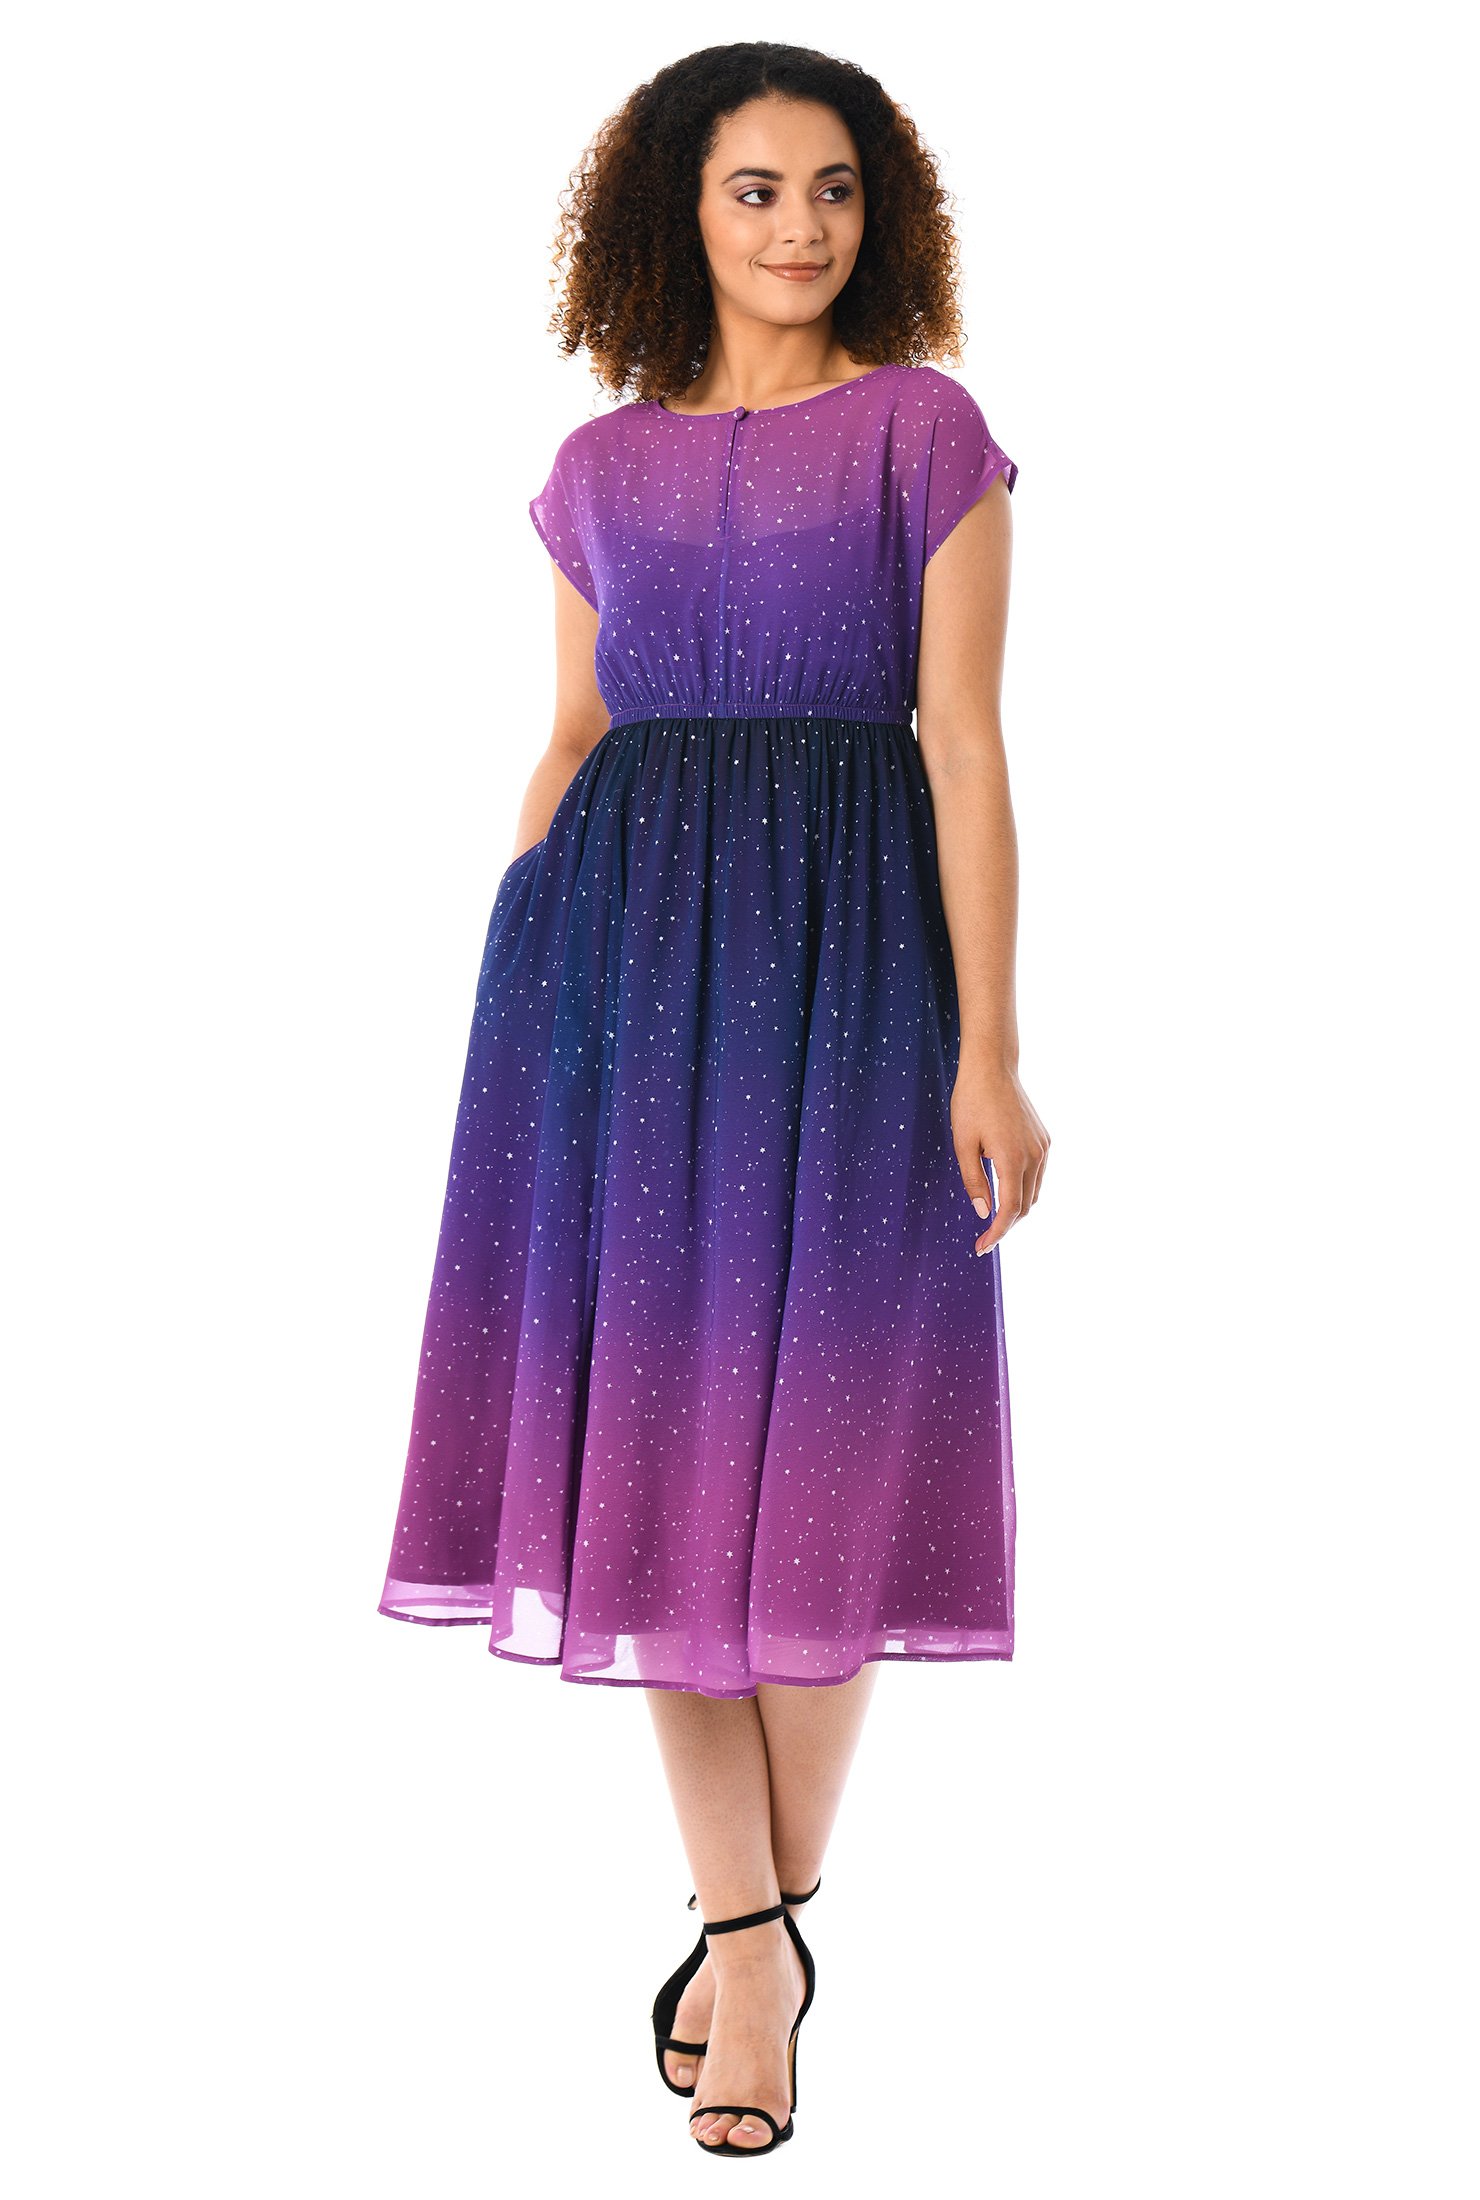 Shop Ombre star print georgette blouson dress | eShakti